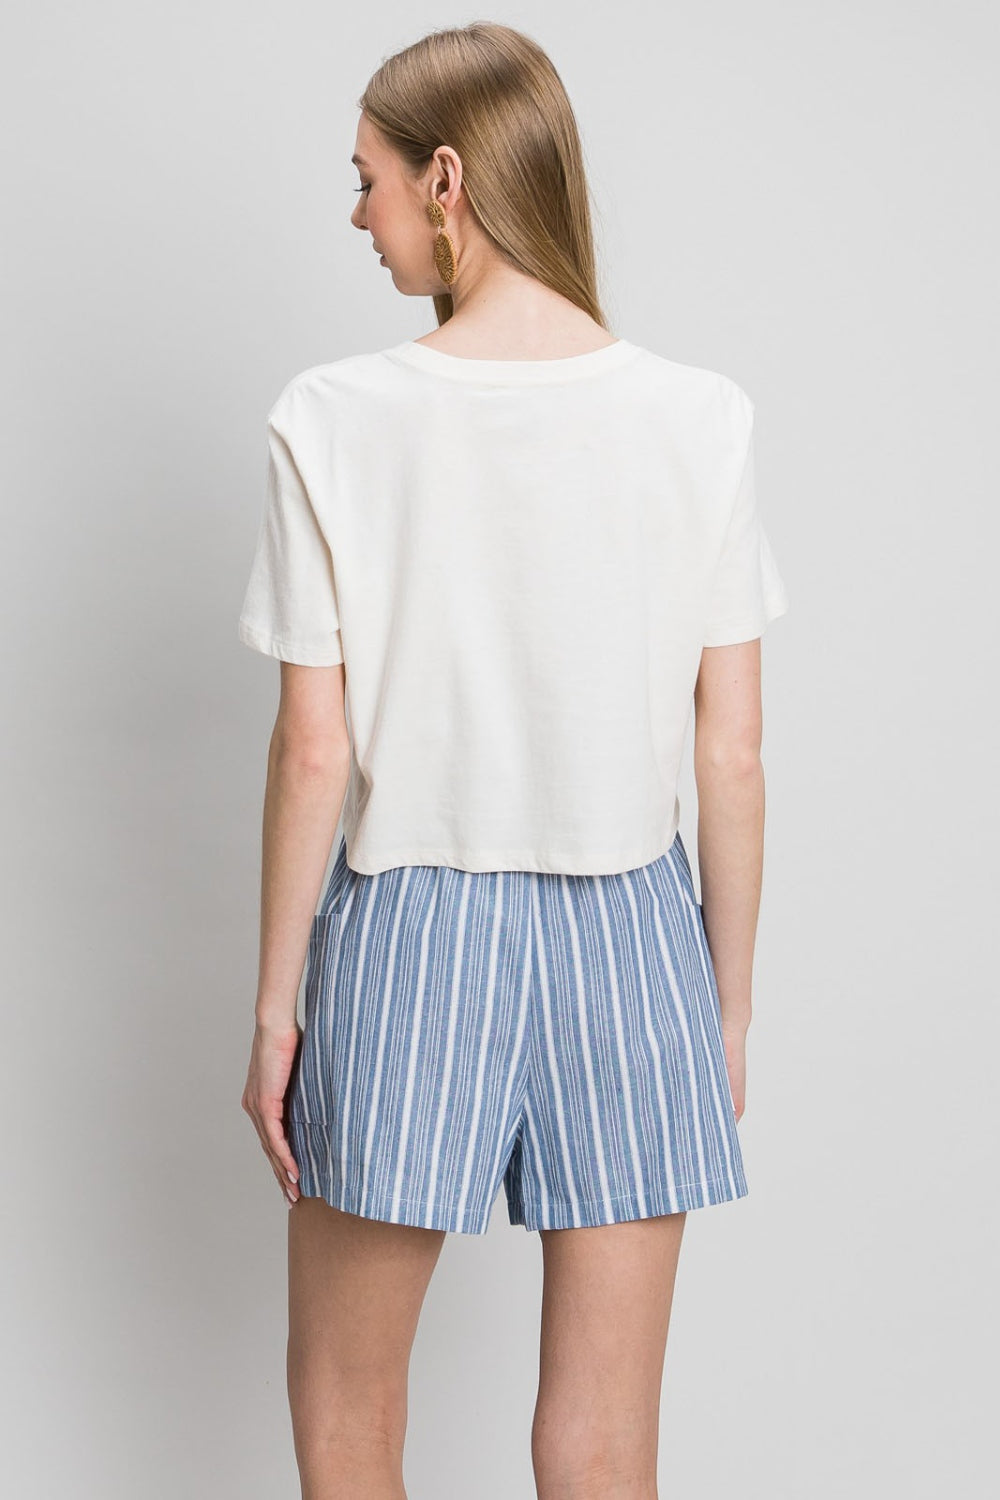 Cotton Bleu by Nu Label Yarn Dye Striped Shorts Trendsi